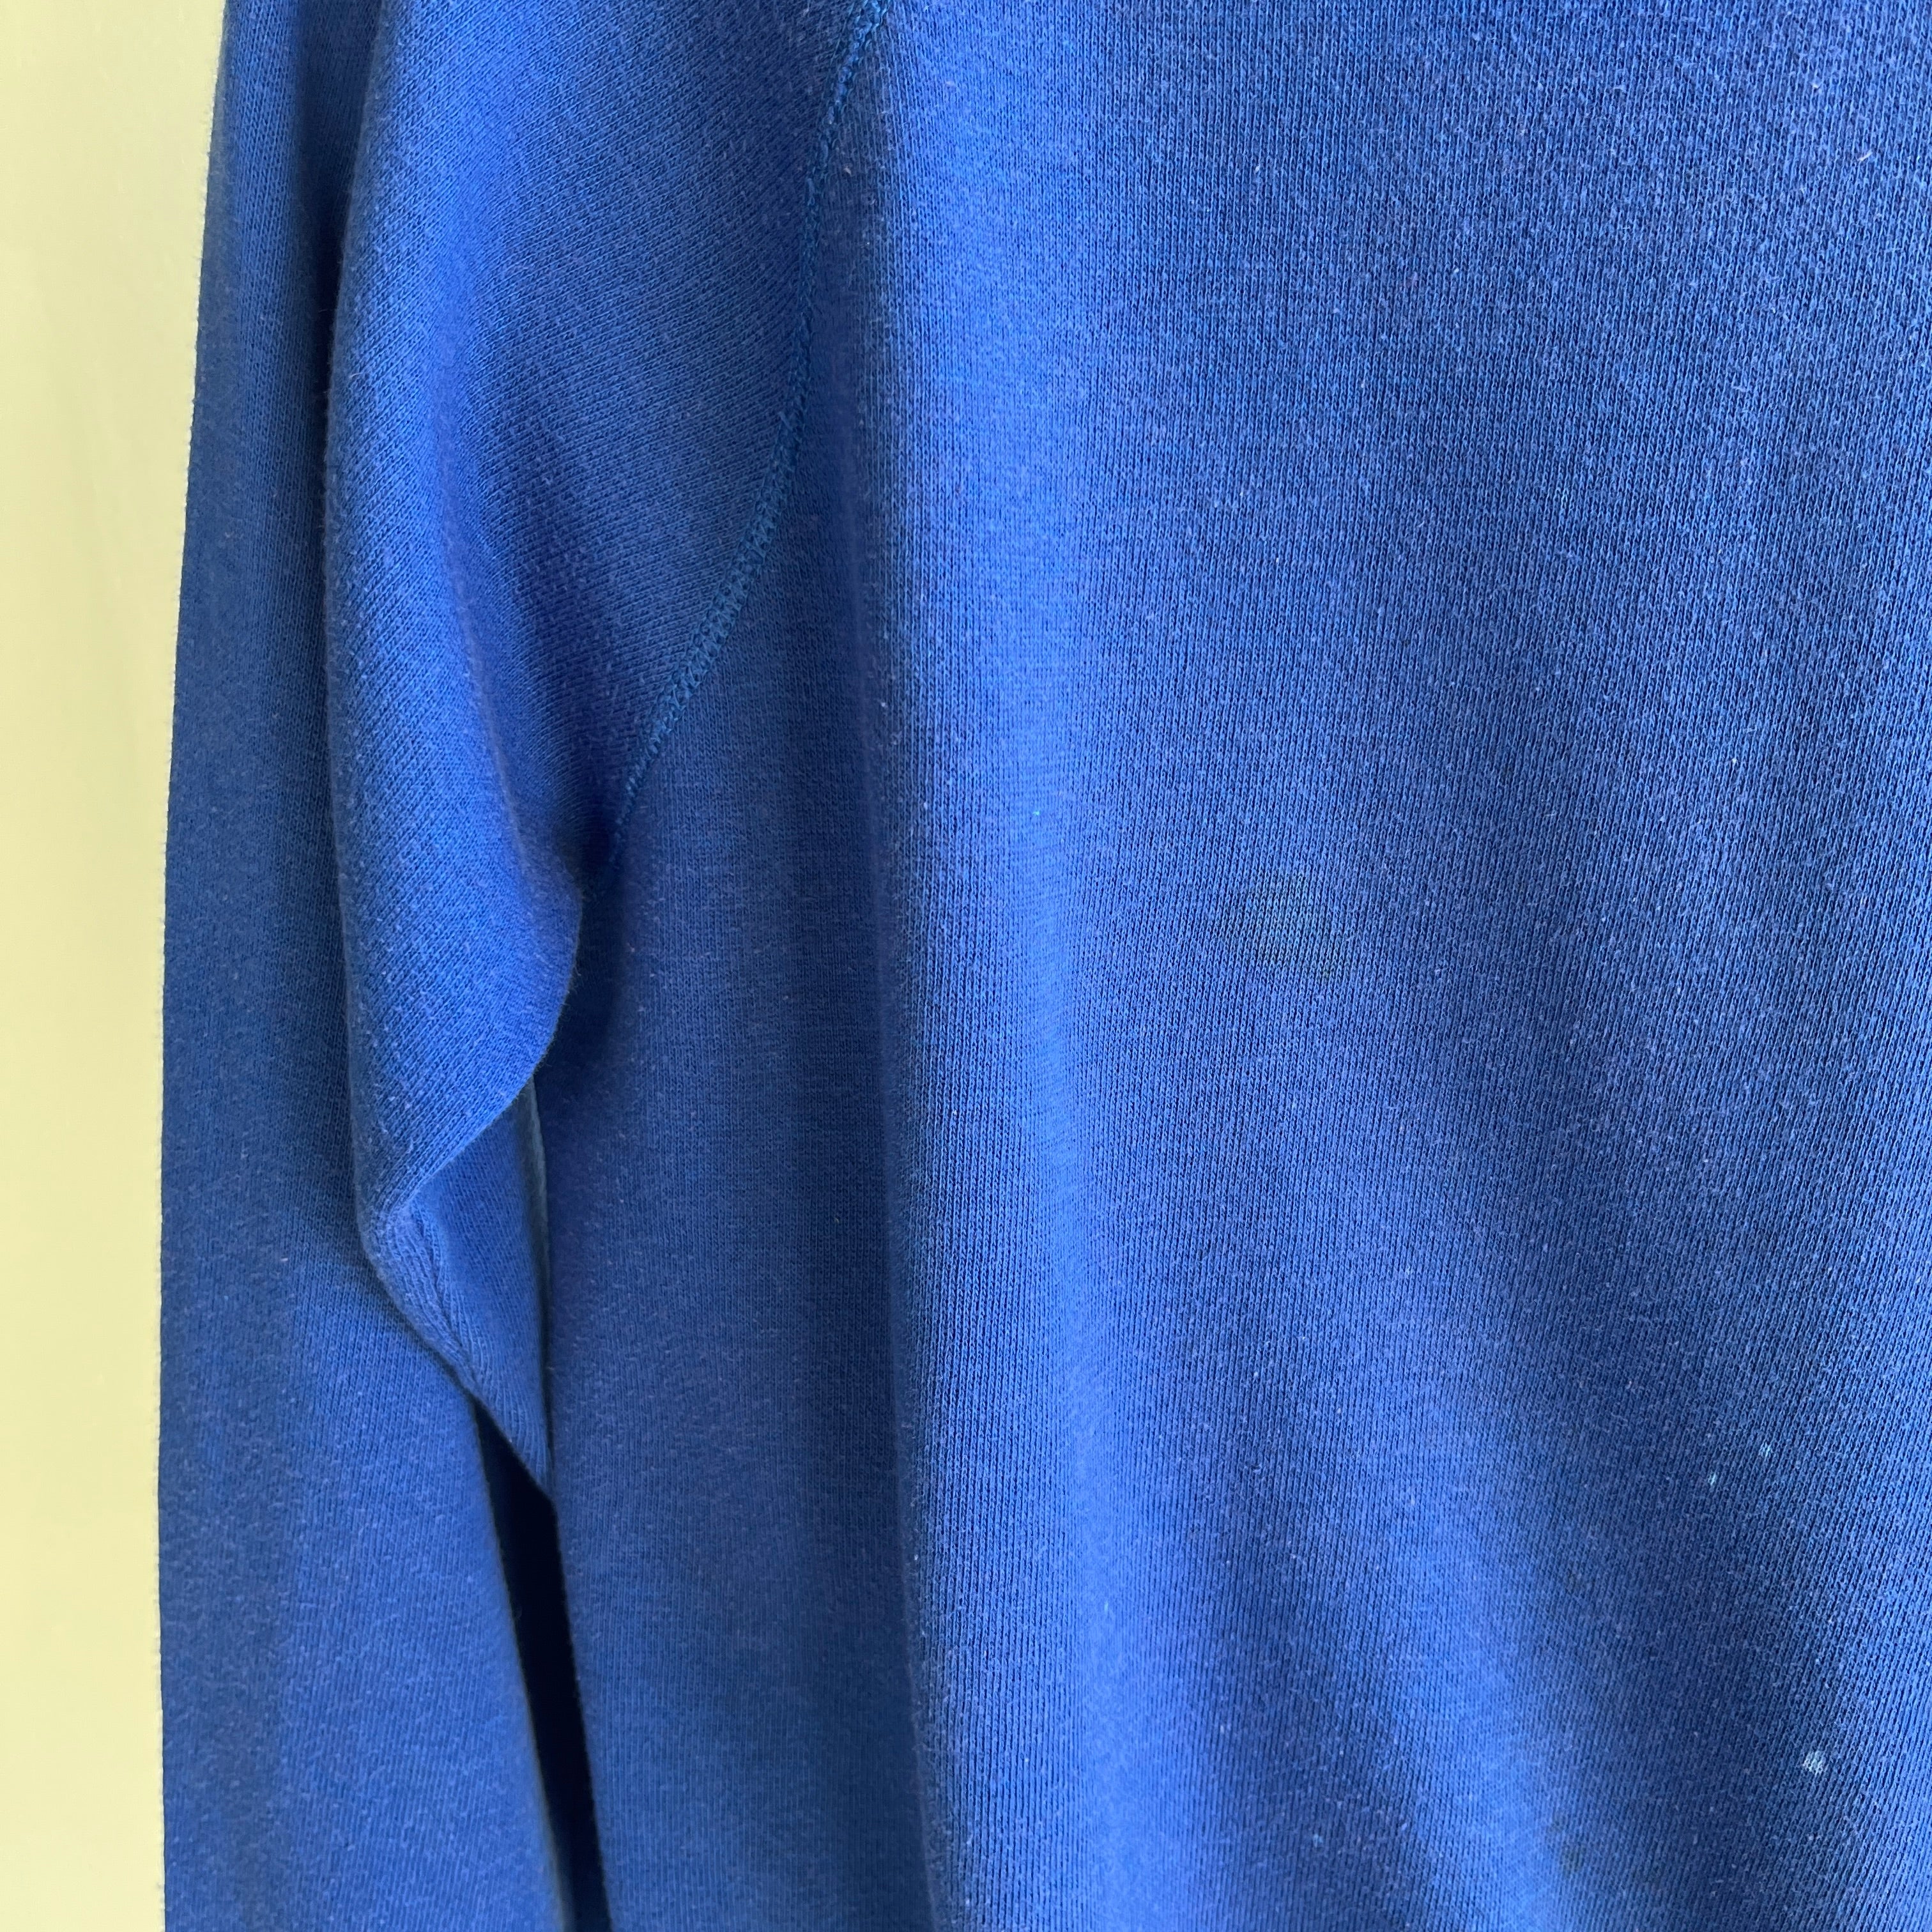 1980s St. John's Bay Royal/Navy Sweatshirt - The Softest